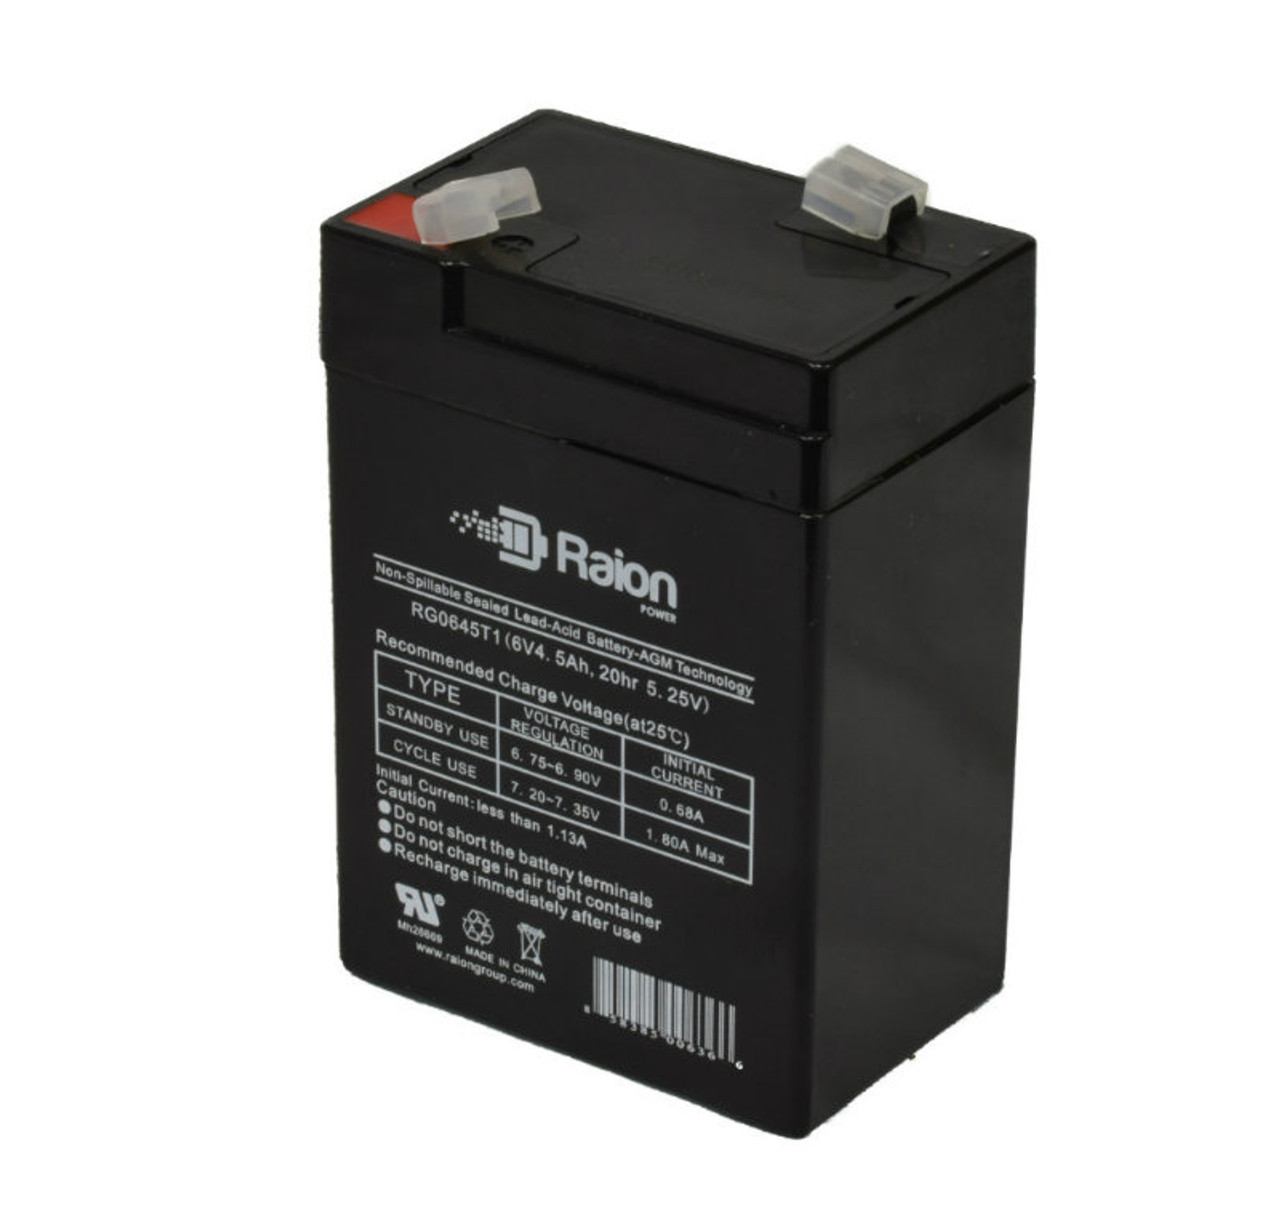 Raion Power RG0645T1 6V 4.5Ah Replacement Battery Cartridge for Sonnenschein A506/4.0S